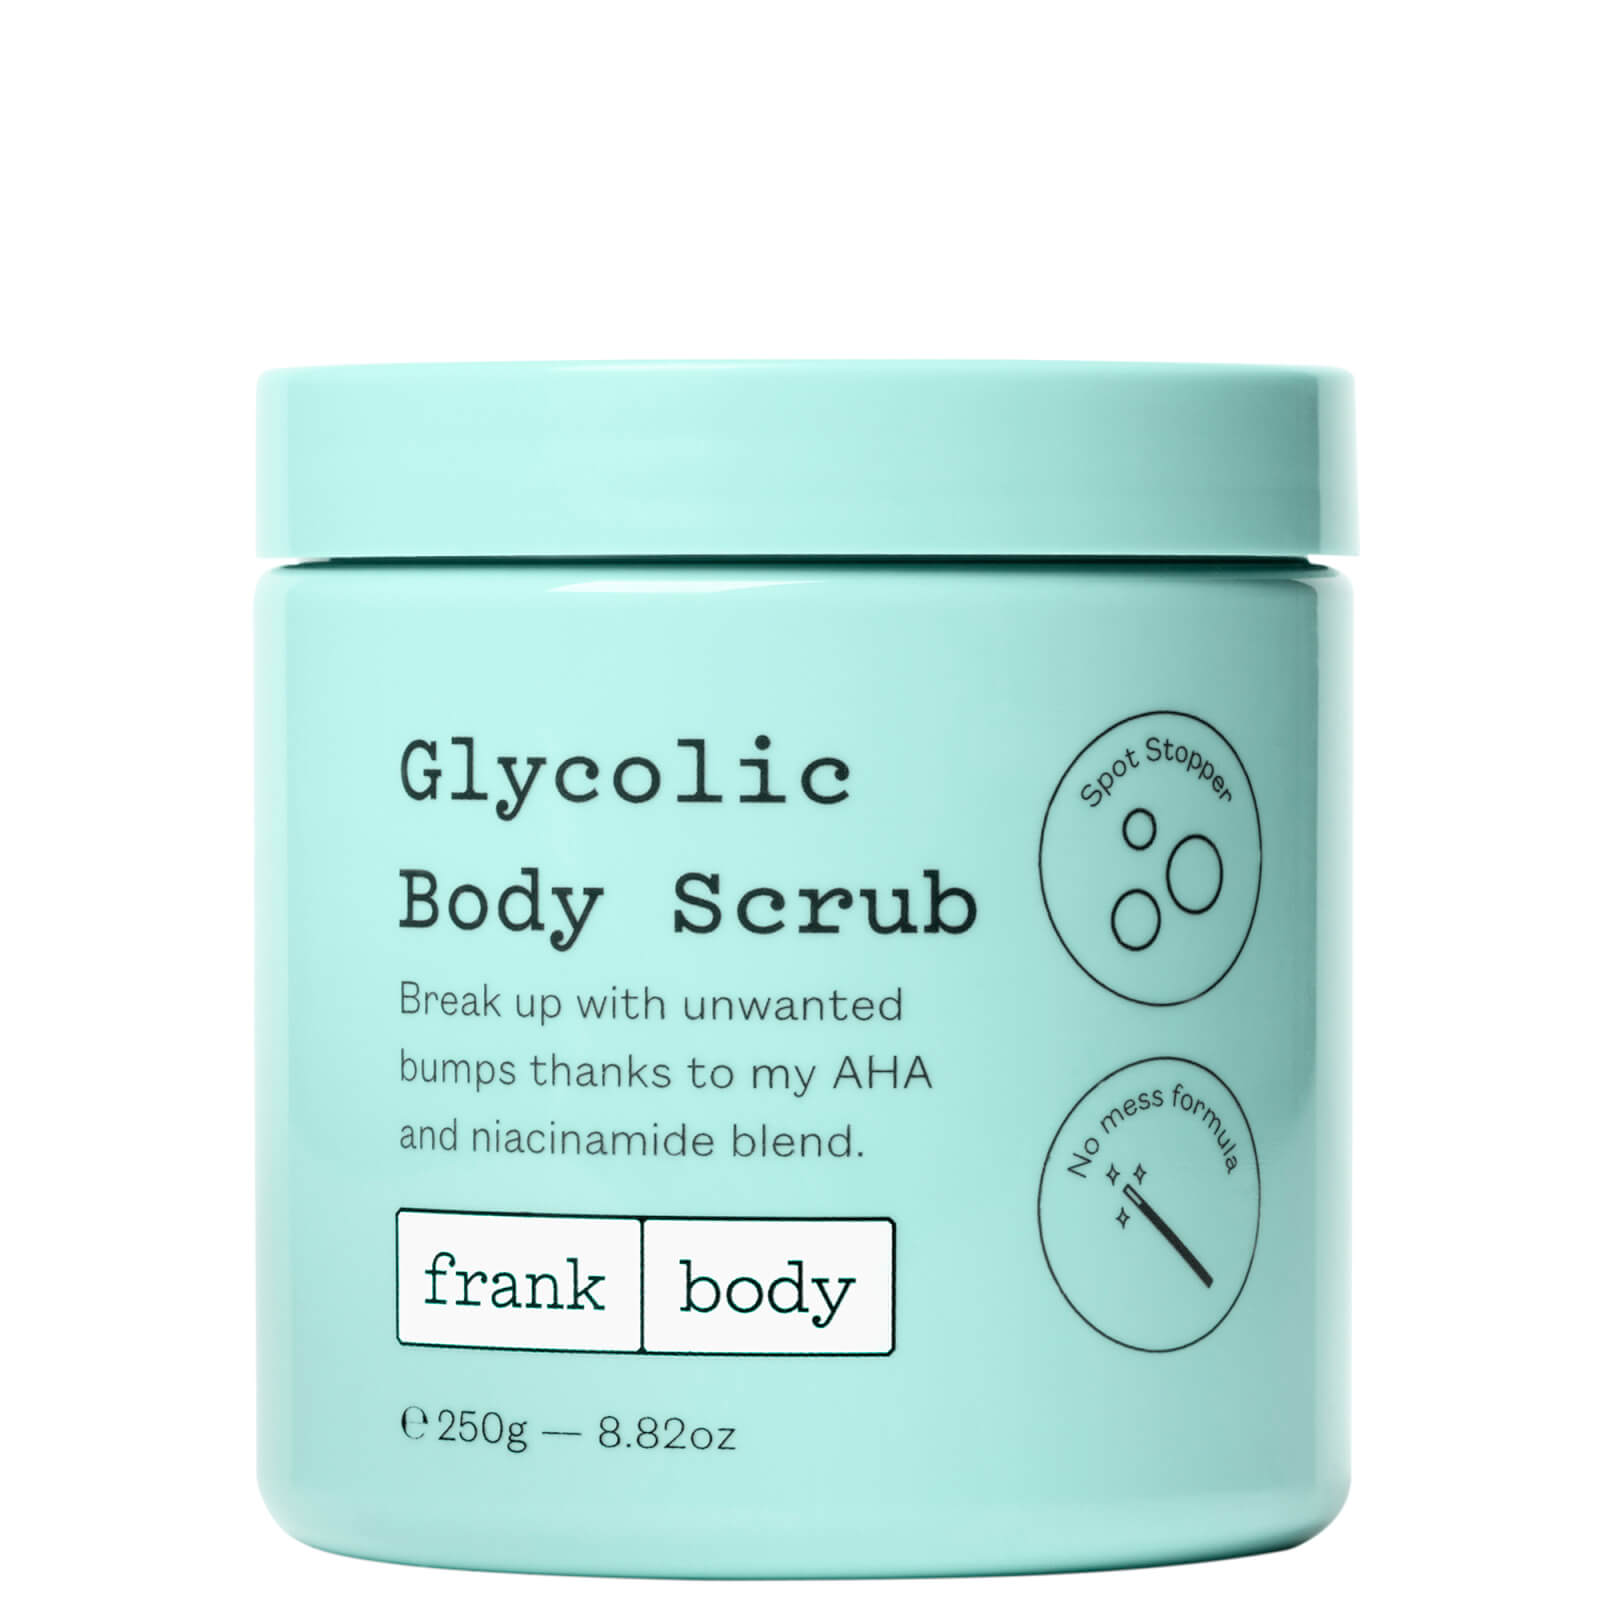 Photos - Facial / Body Cleansing Product frank body Glycolic Body Scrub 250g